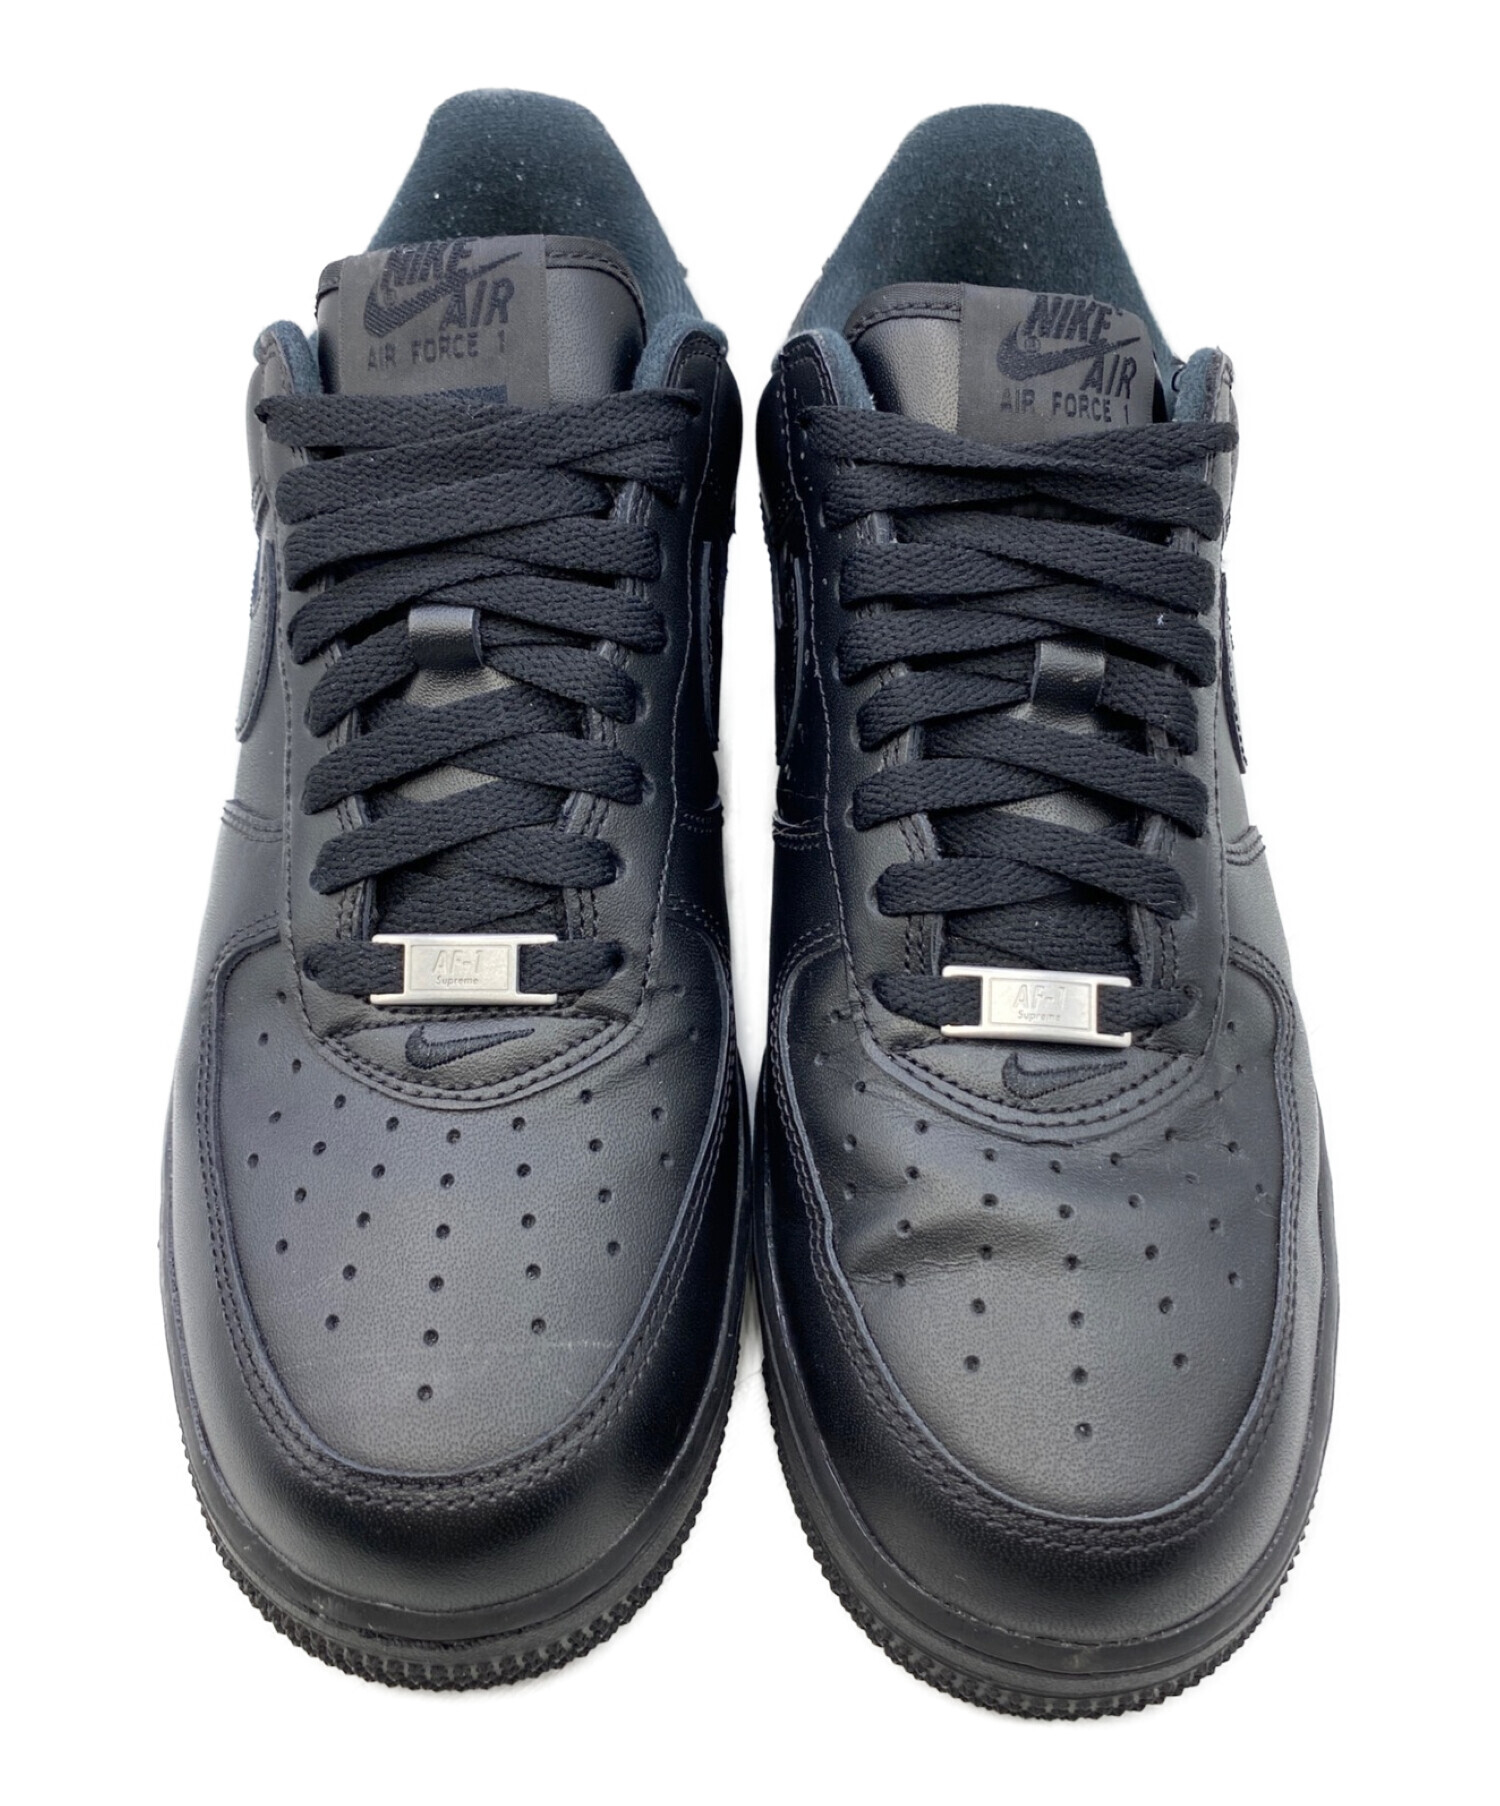 Supreme Nike Air Force 1 Low Black us8.5